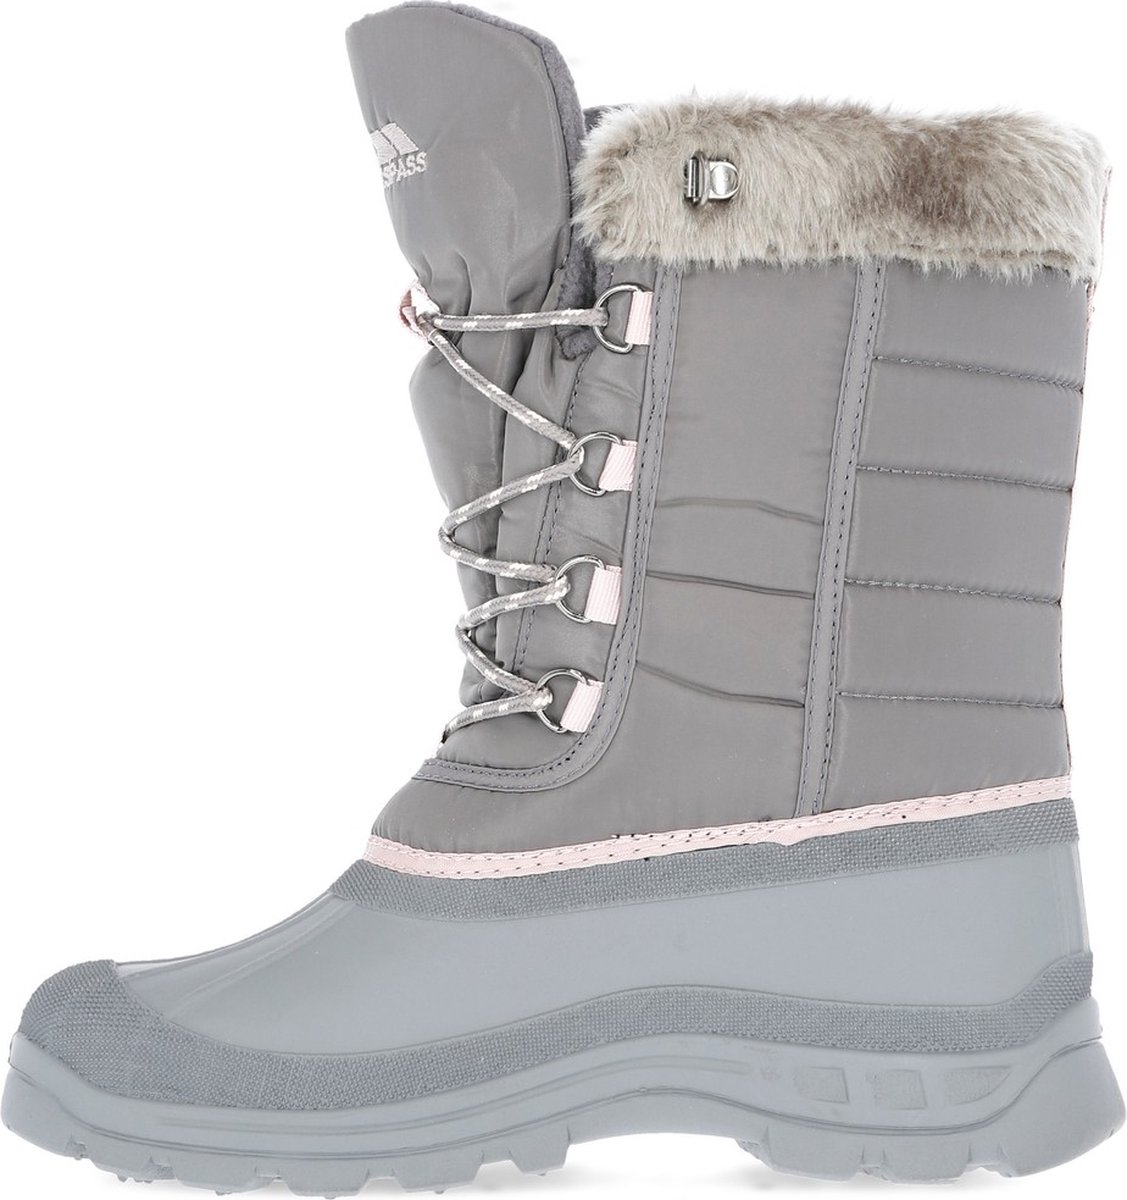 Trespass Stavra II Women's Insulated Waterproof Snow Boots